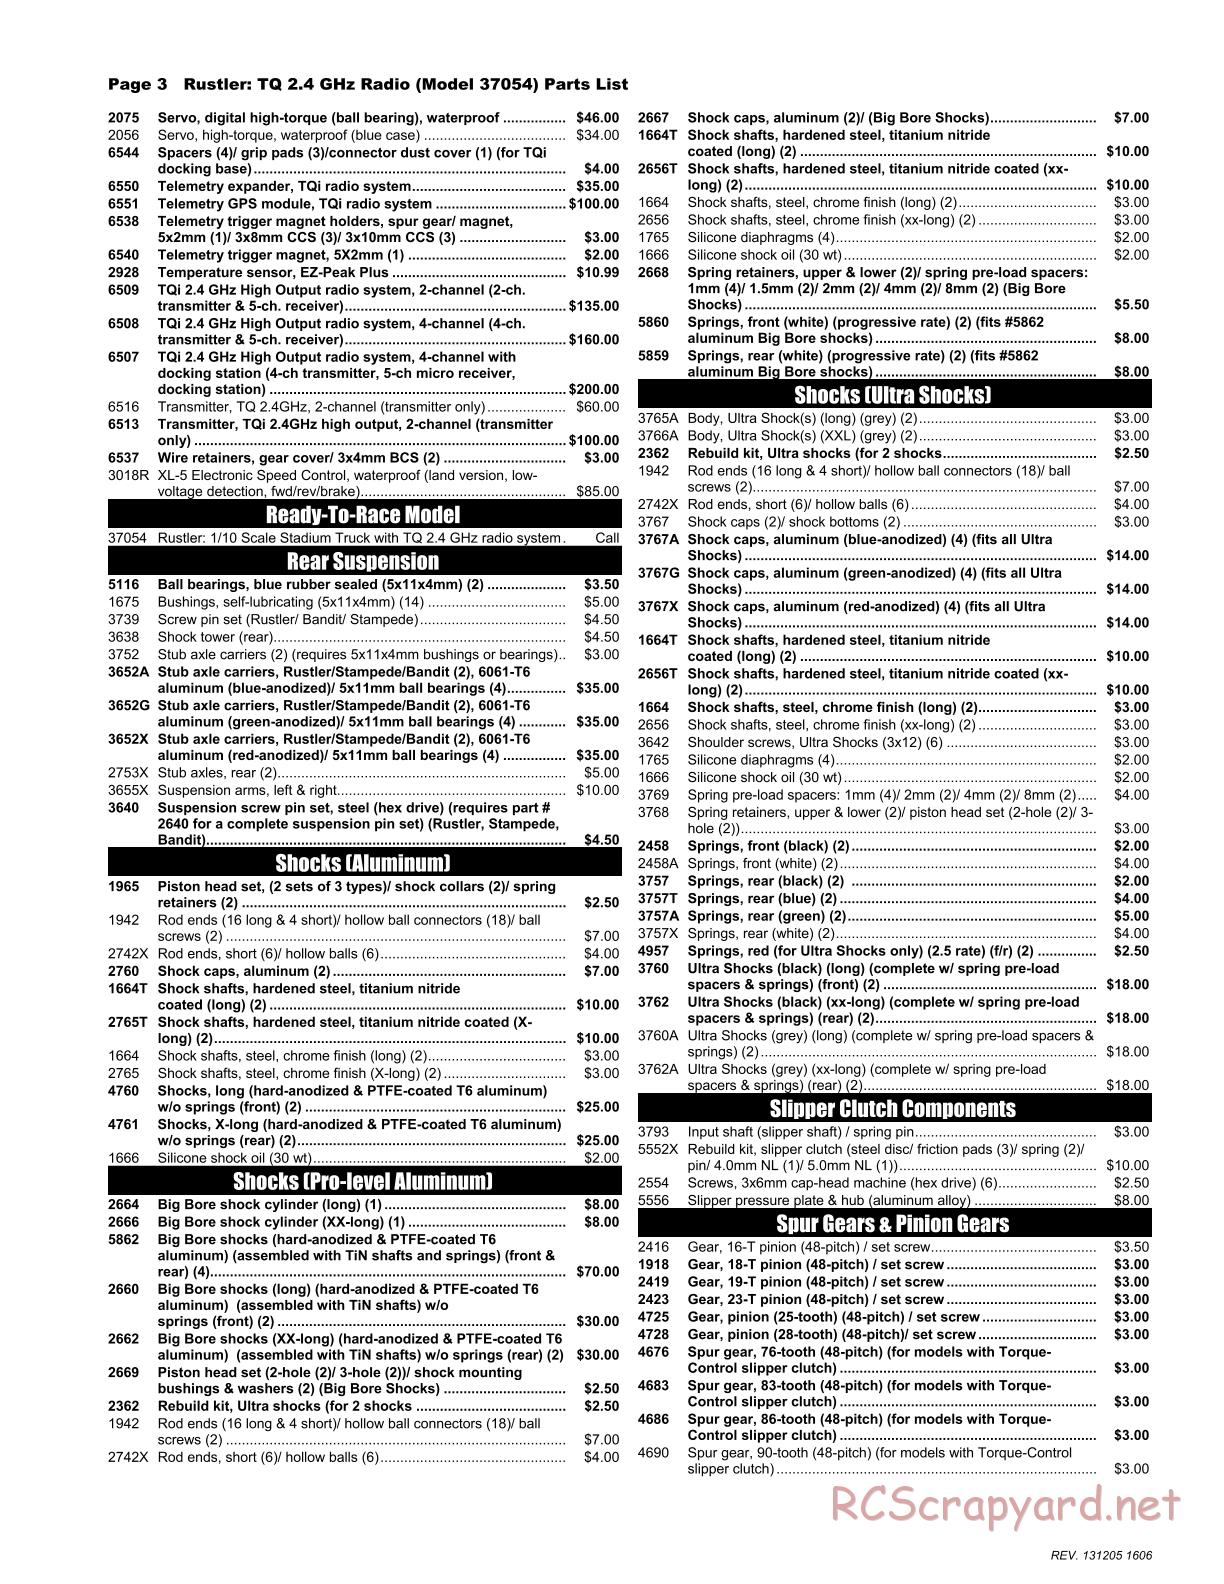 Traxxas - Rustler XL-5 (2013) - Parts List - Page 3